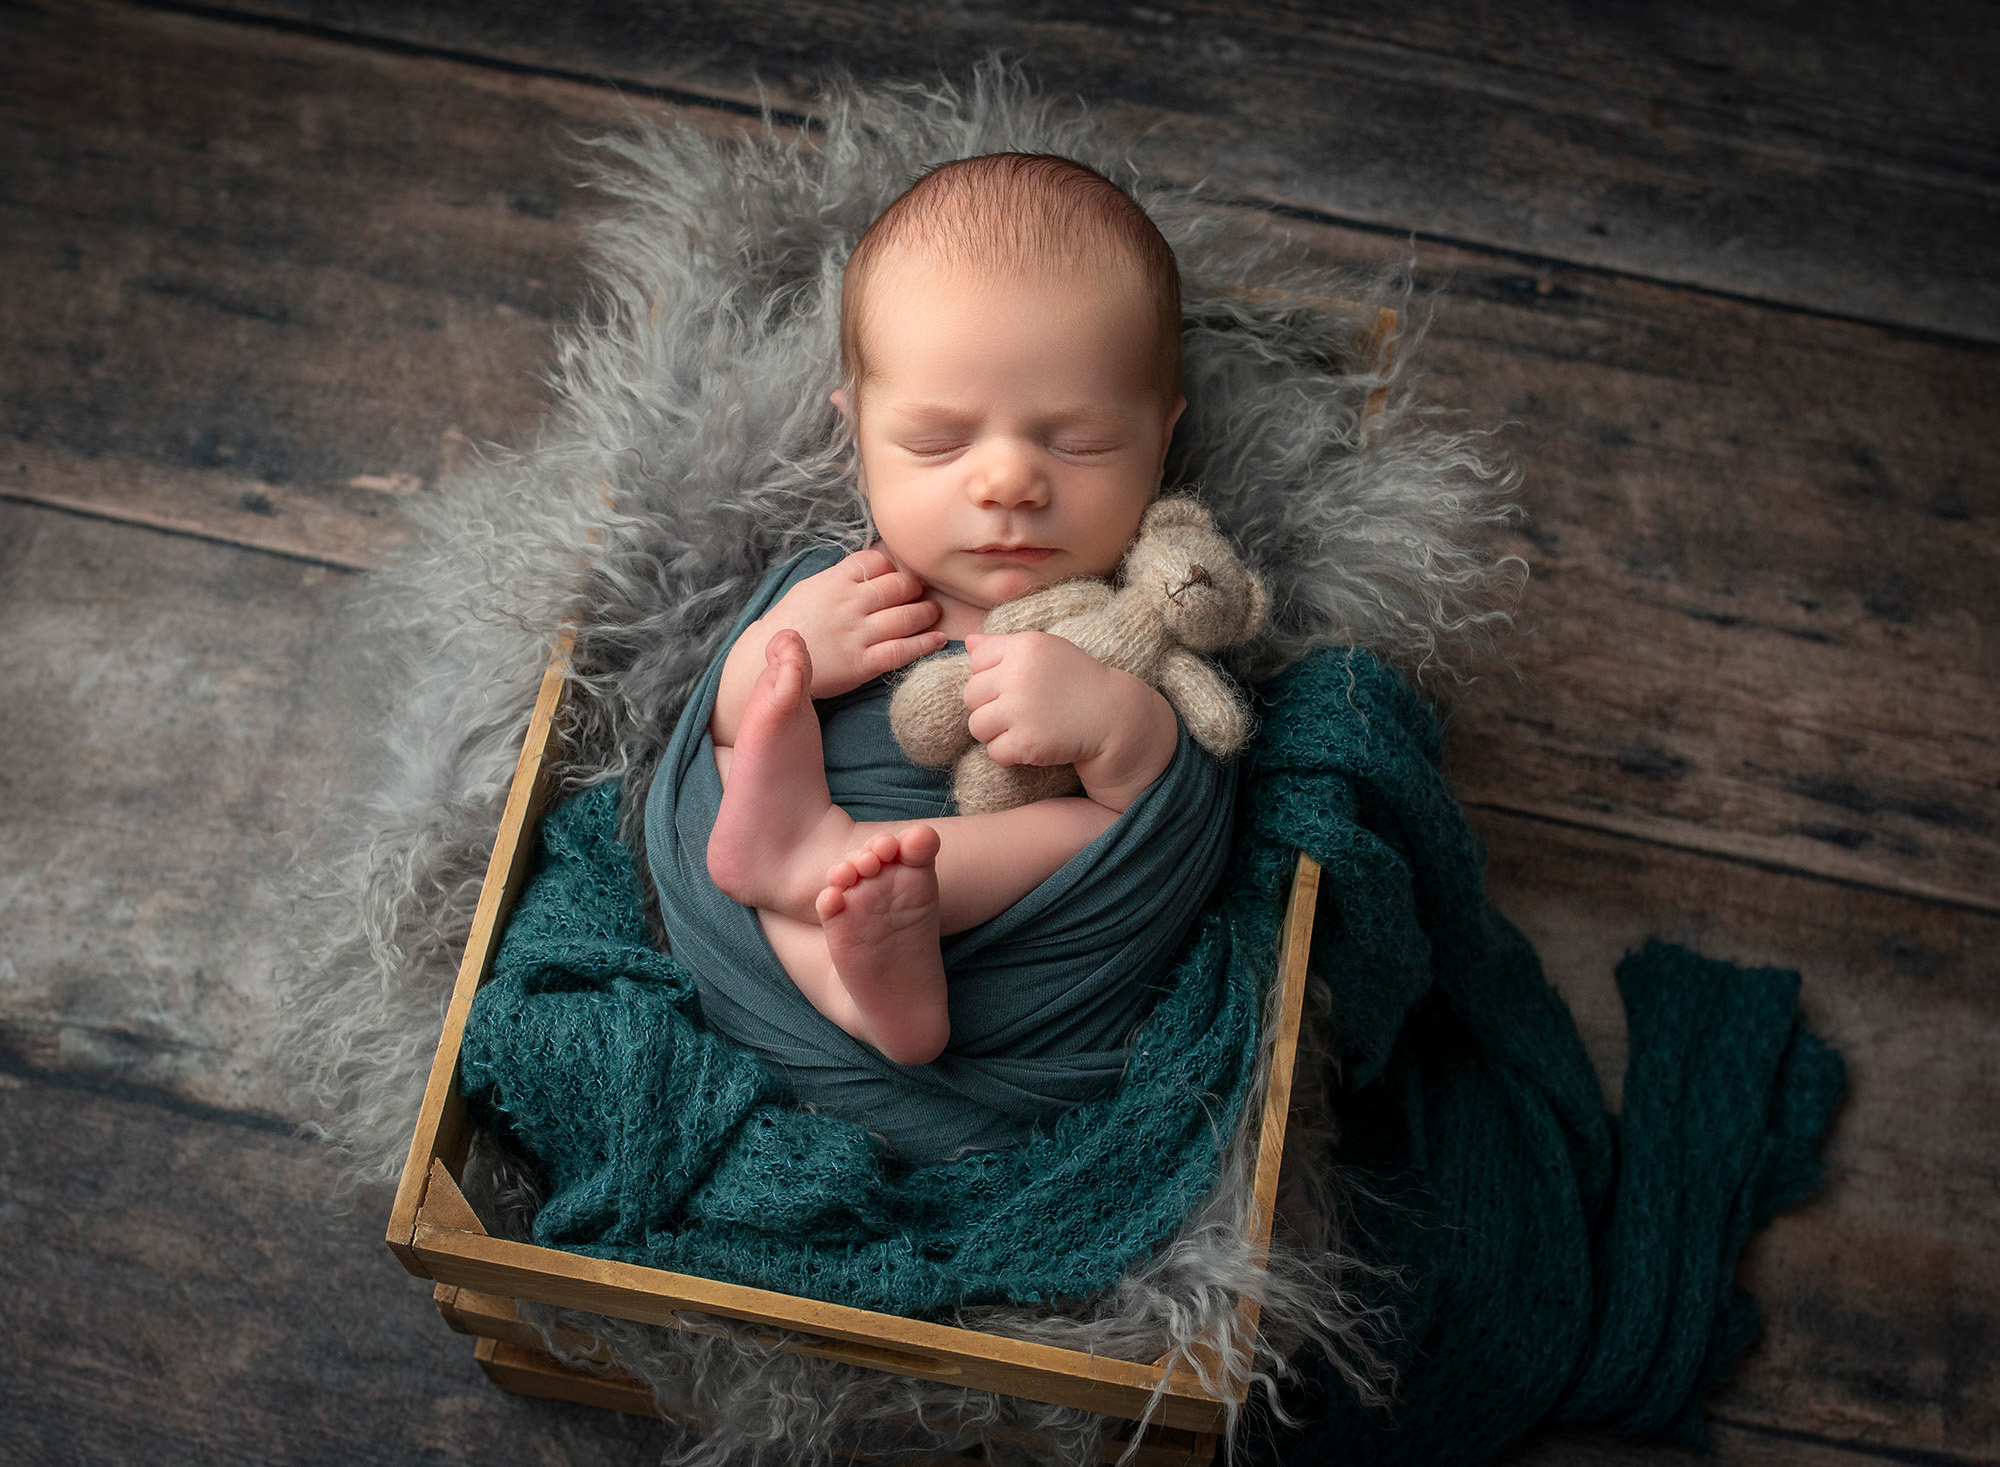 Glastonbury newborn photographer newborn baby boy asleep in rustic crate cuddling teddy bear